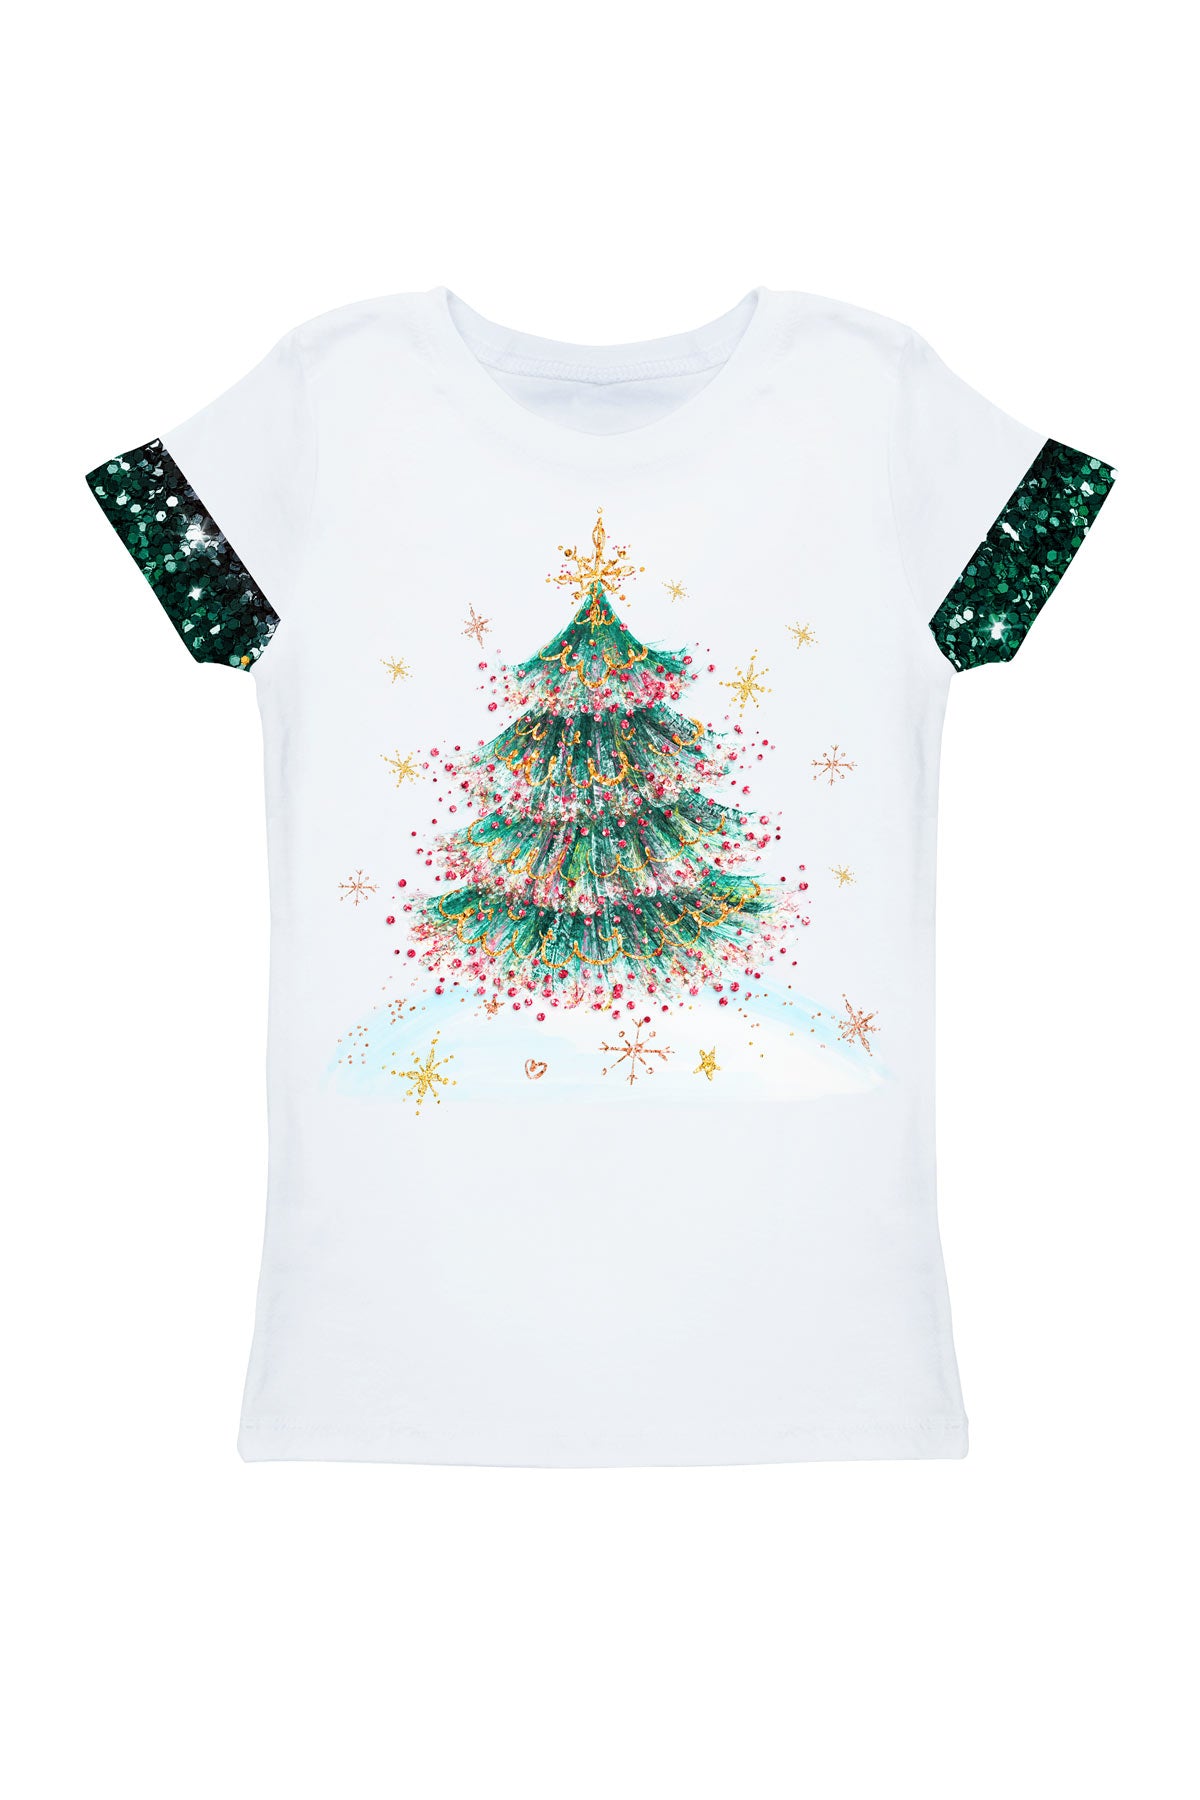 Glitzy Tinsel Zoe White Christmas Tree Printed Holiday T-Shirt - Girls - Pineapple Clothing